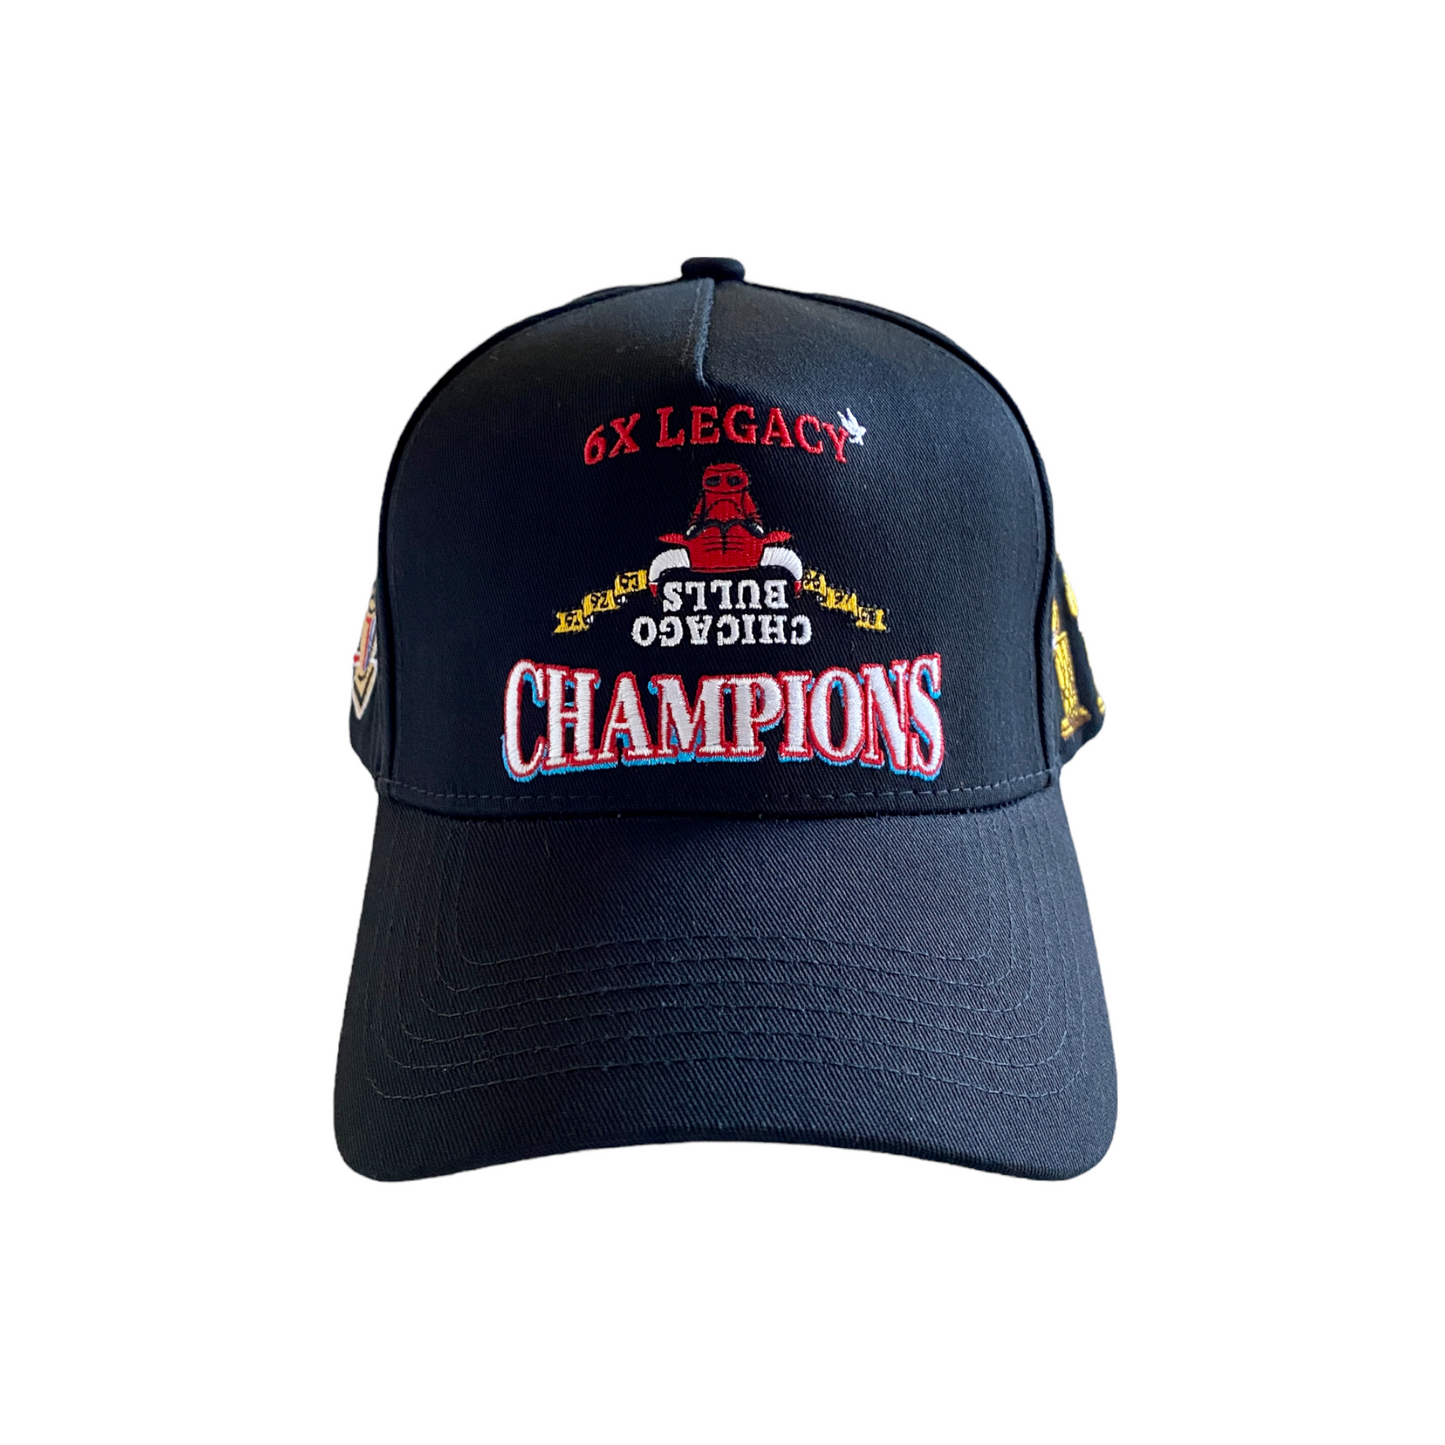 6x Legacy Champions Hat